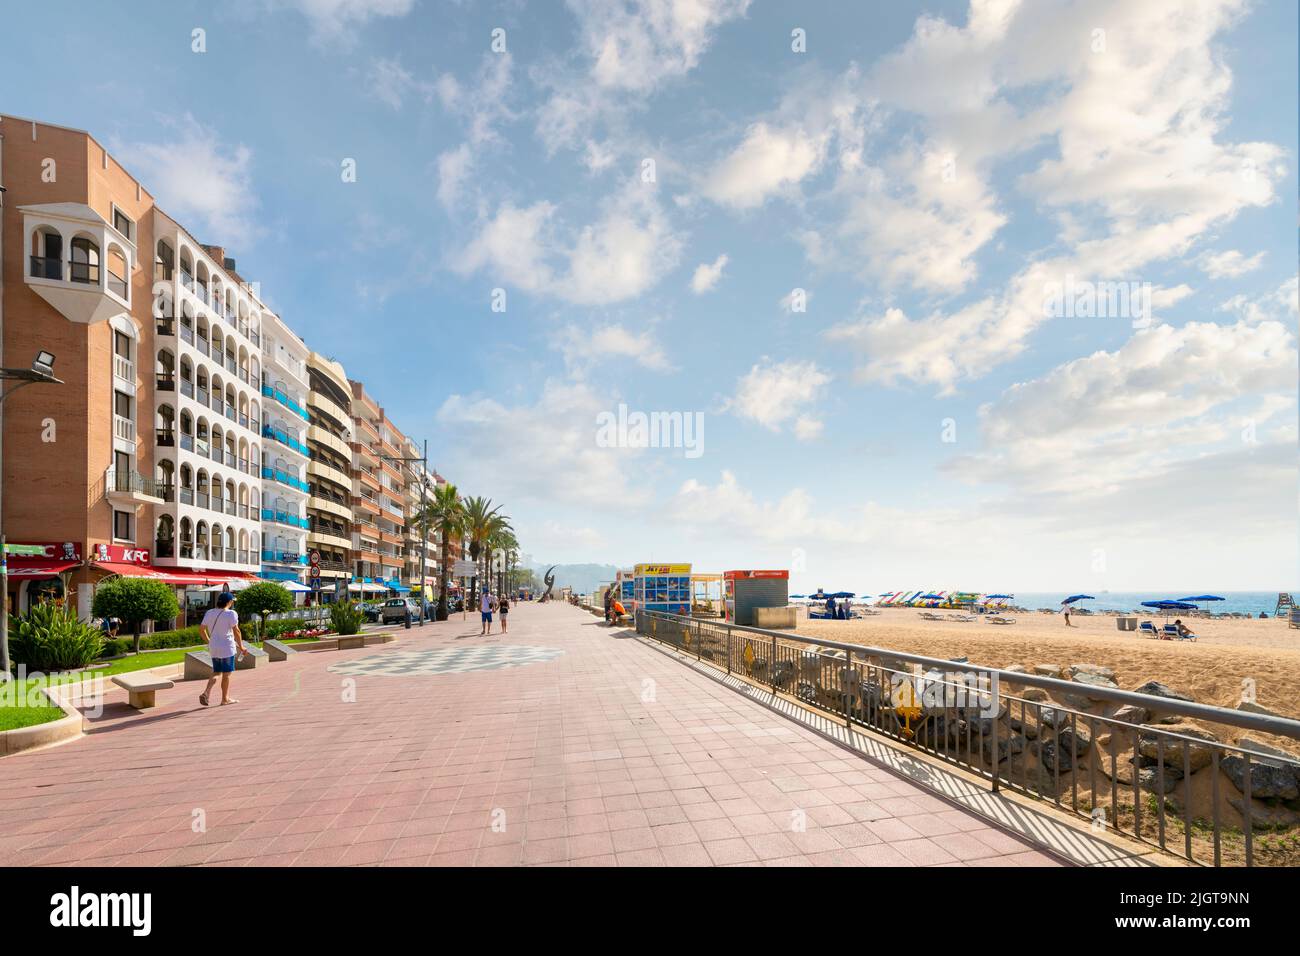 The Spanish resort town of Lloret de Mar, Spain, along the Costa Brava coast of the Mediterranean Sea. Stock Photo